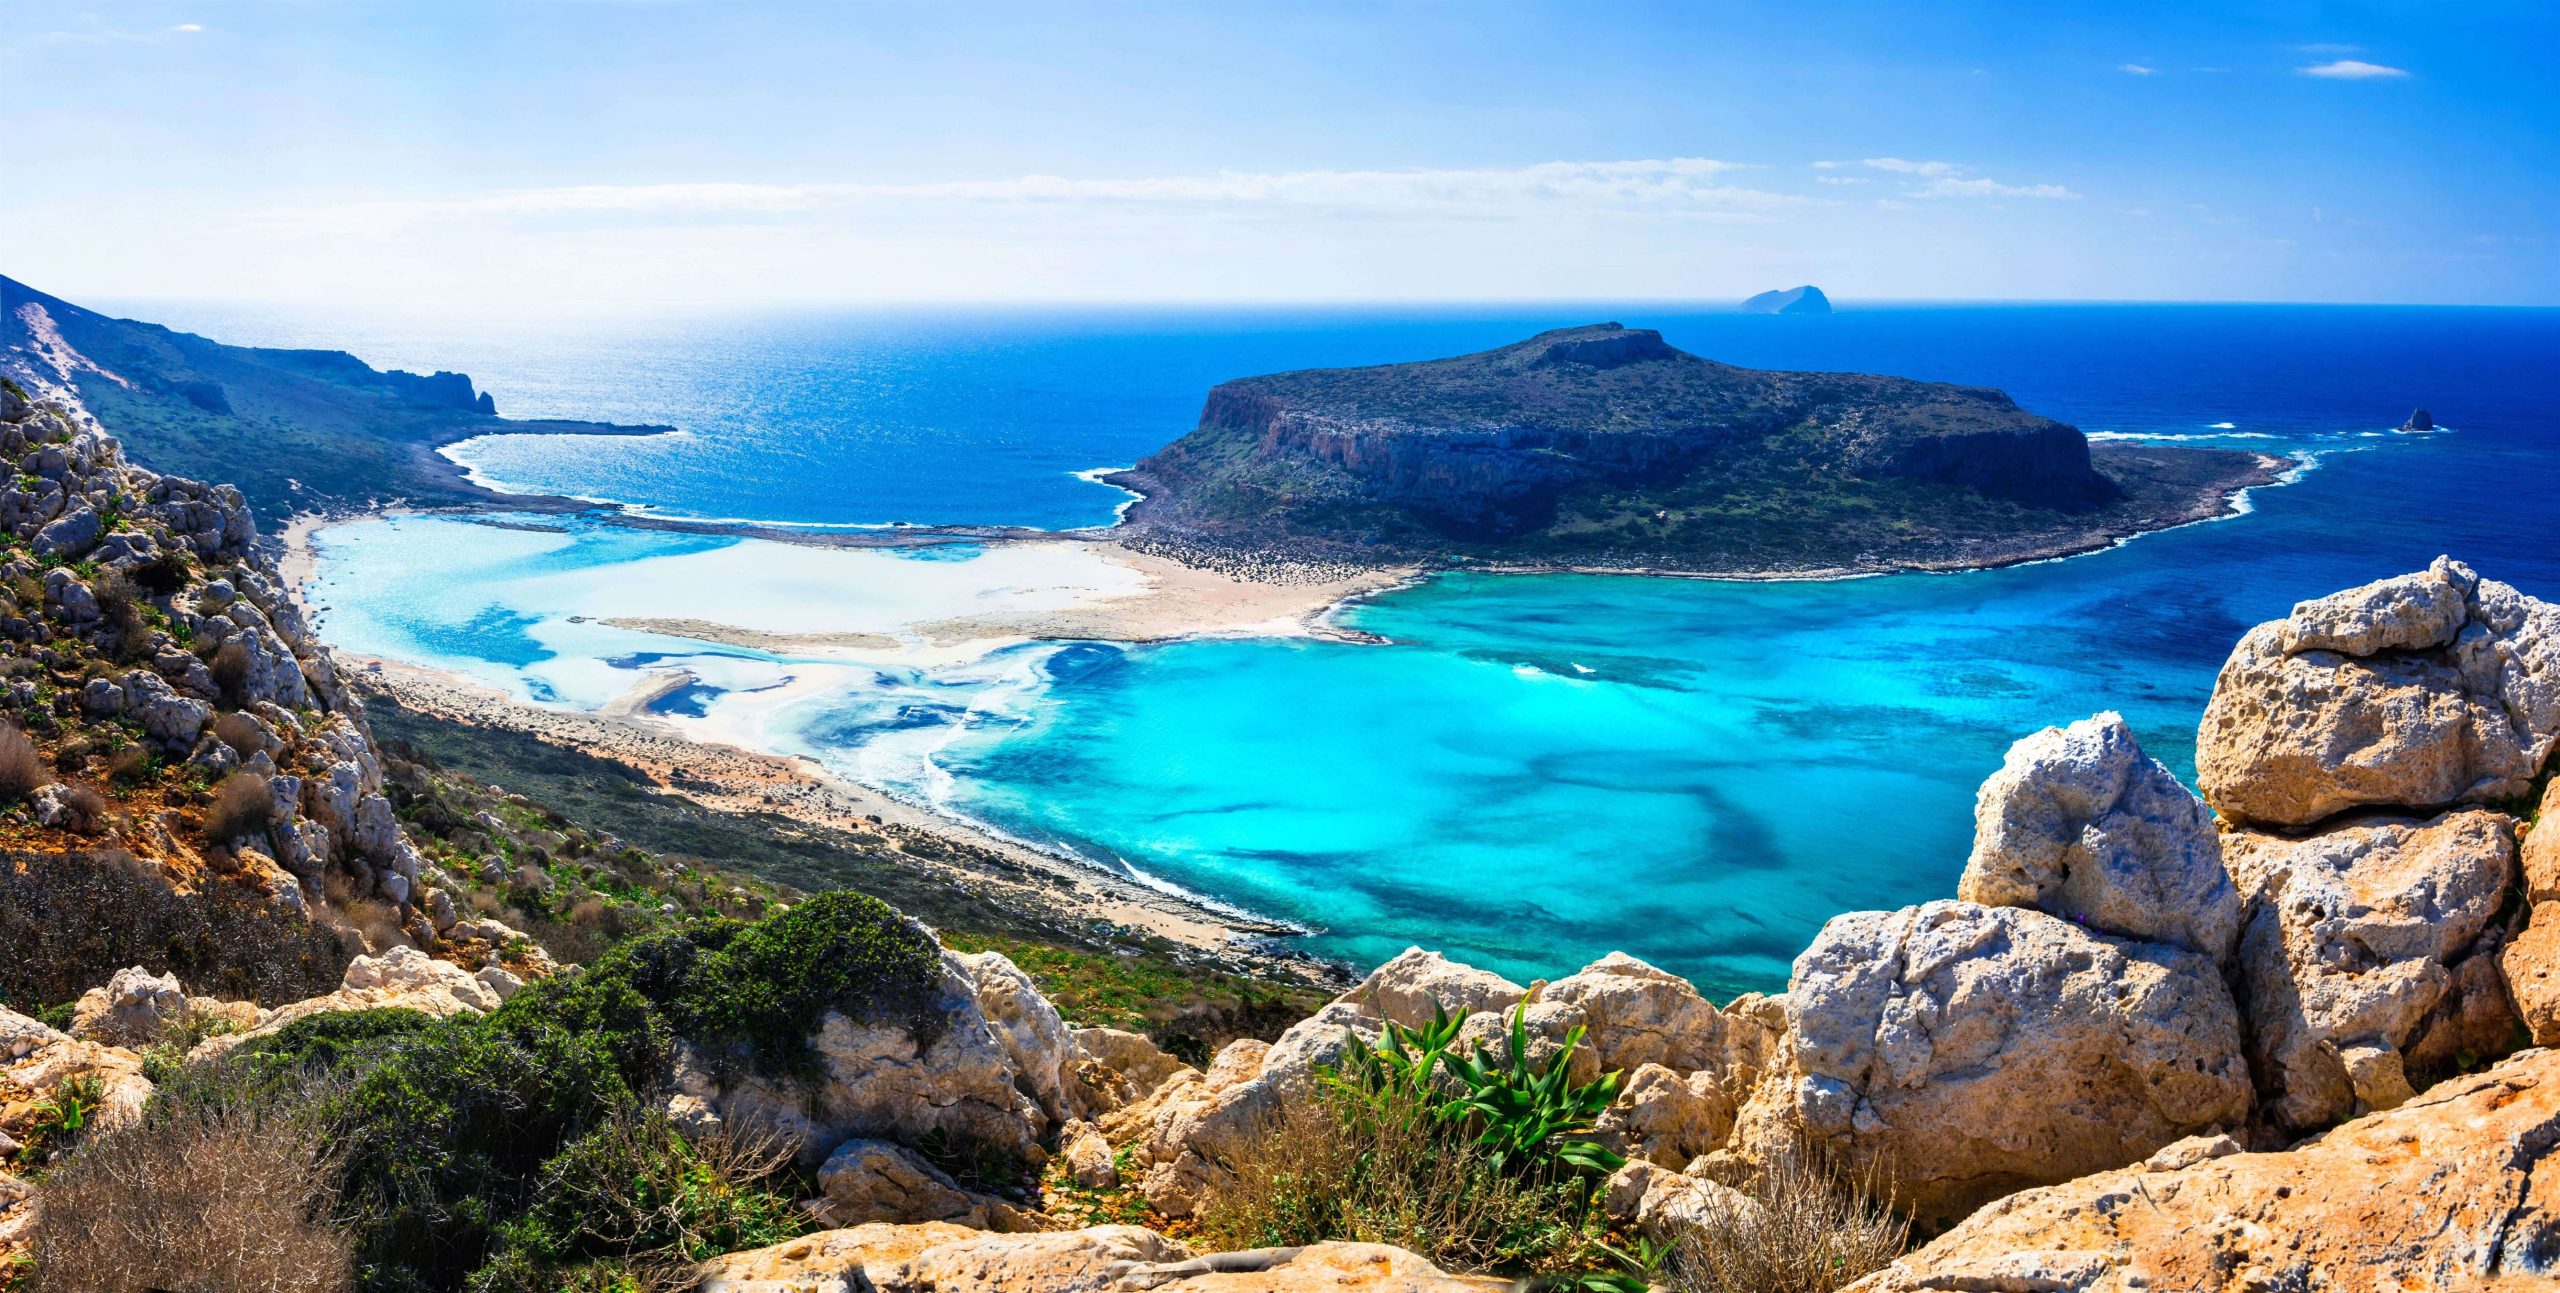 The island of Crete